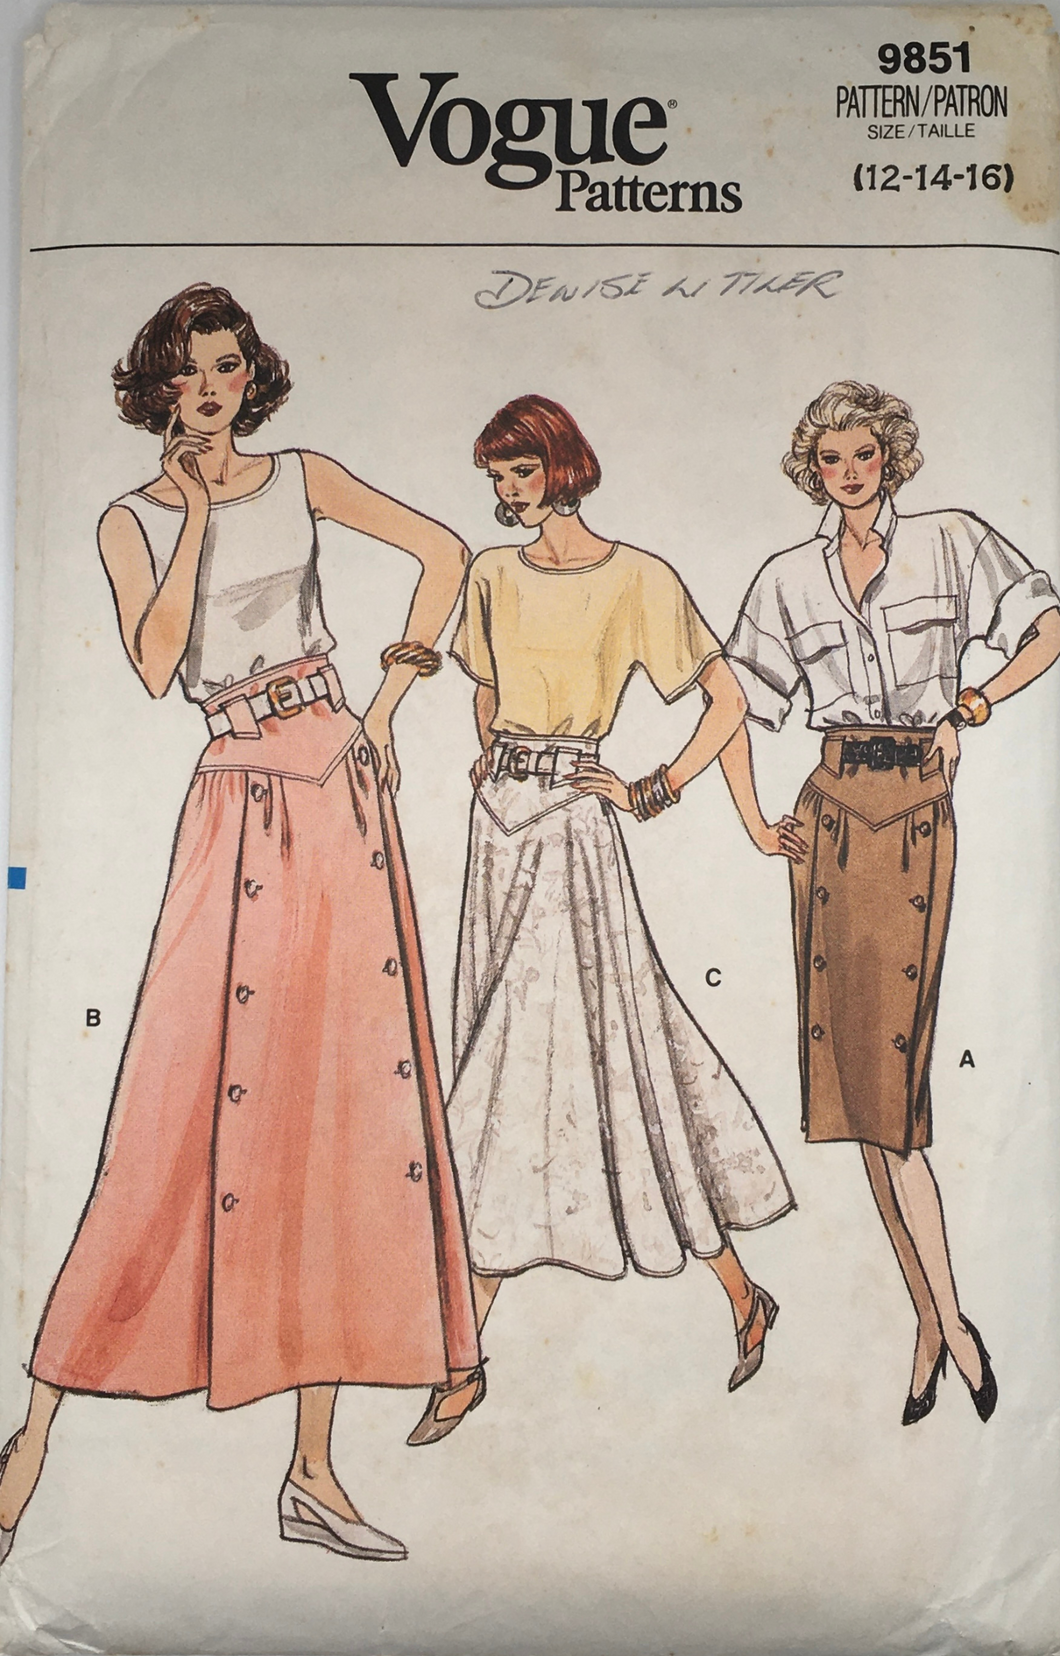 1987 Vintage Sewing Pattern: Vogue 9851